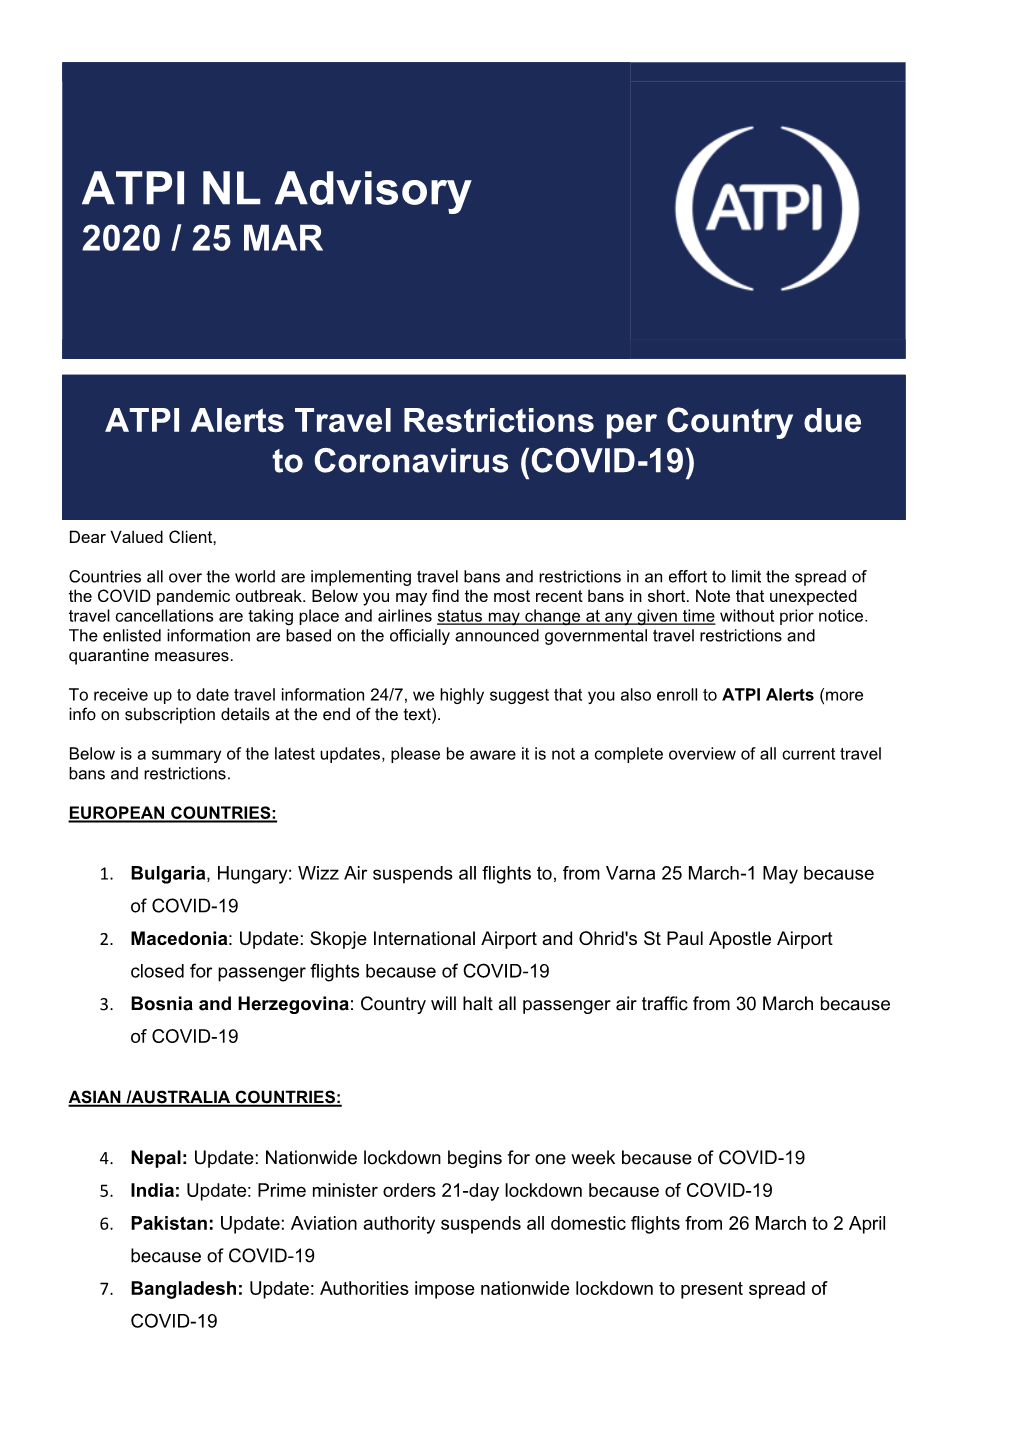 ATPI NL Advisory 2020 / 25 MAR